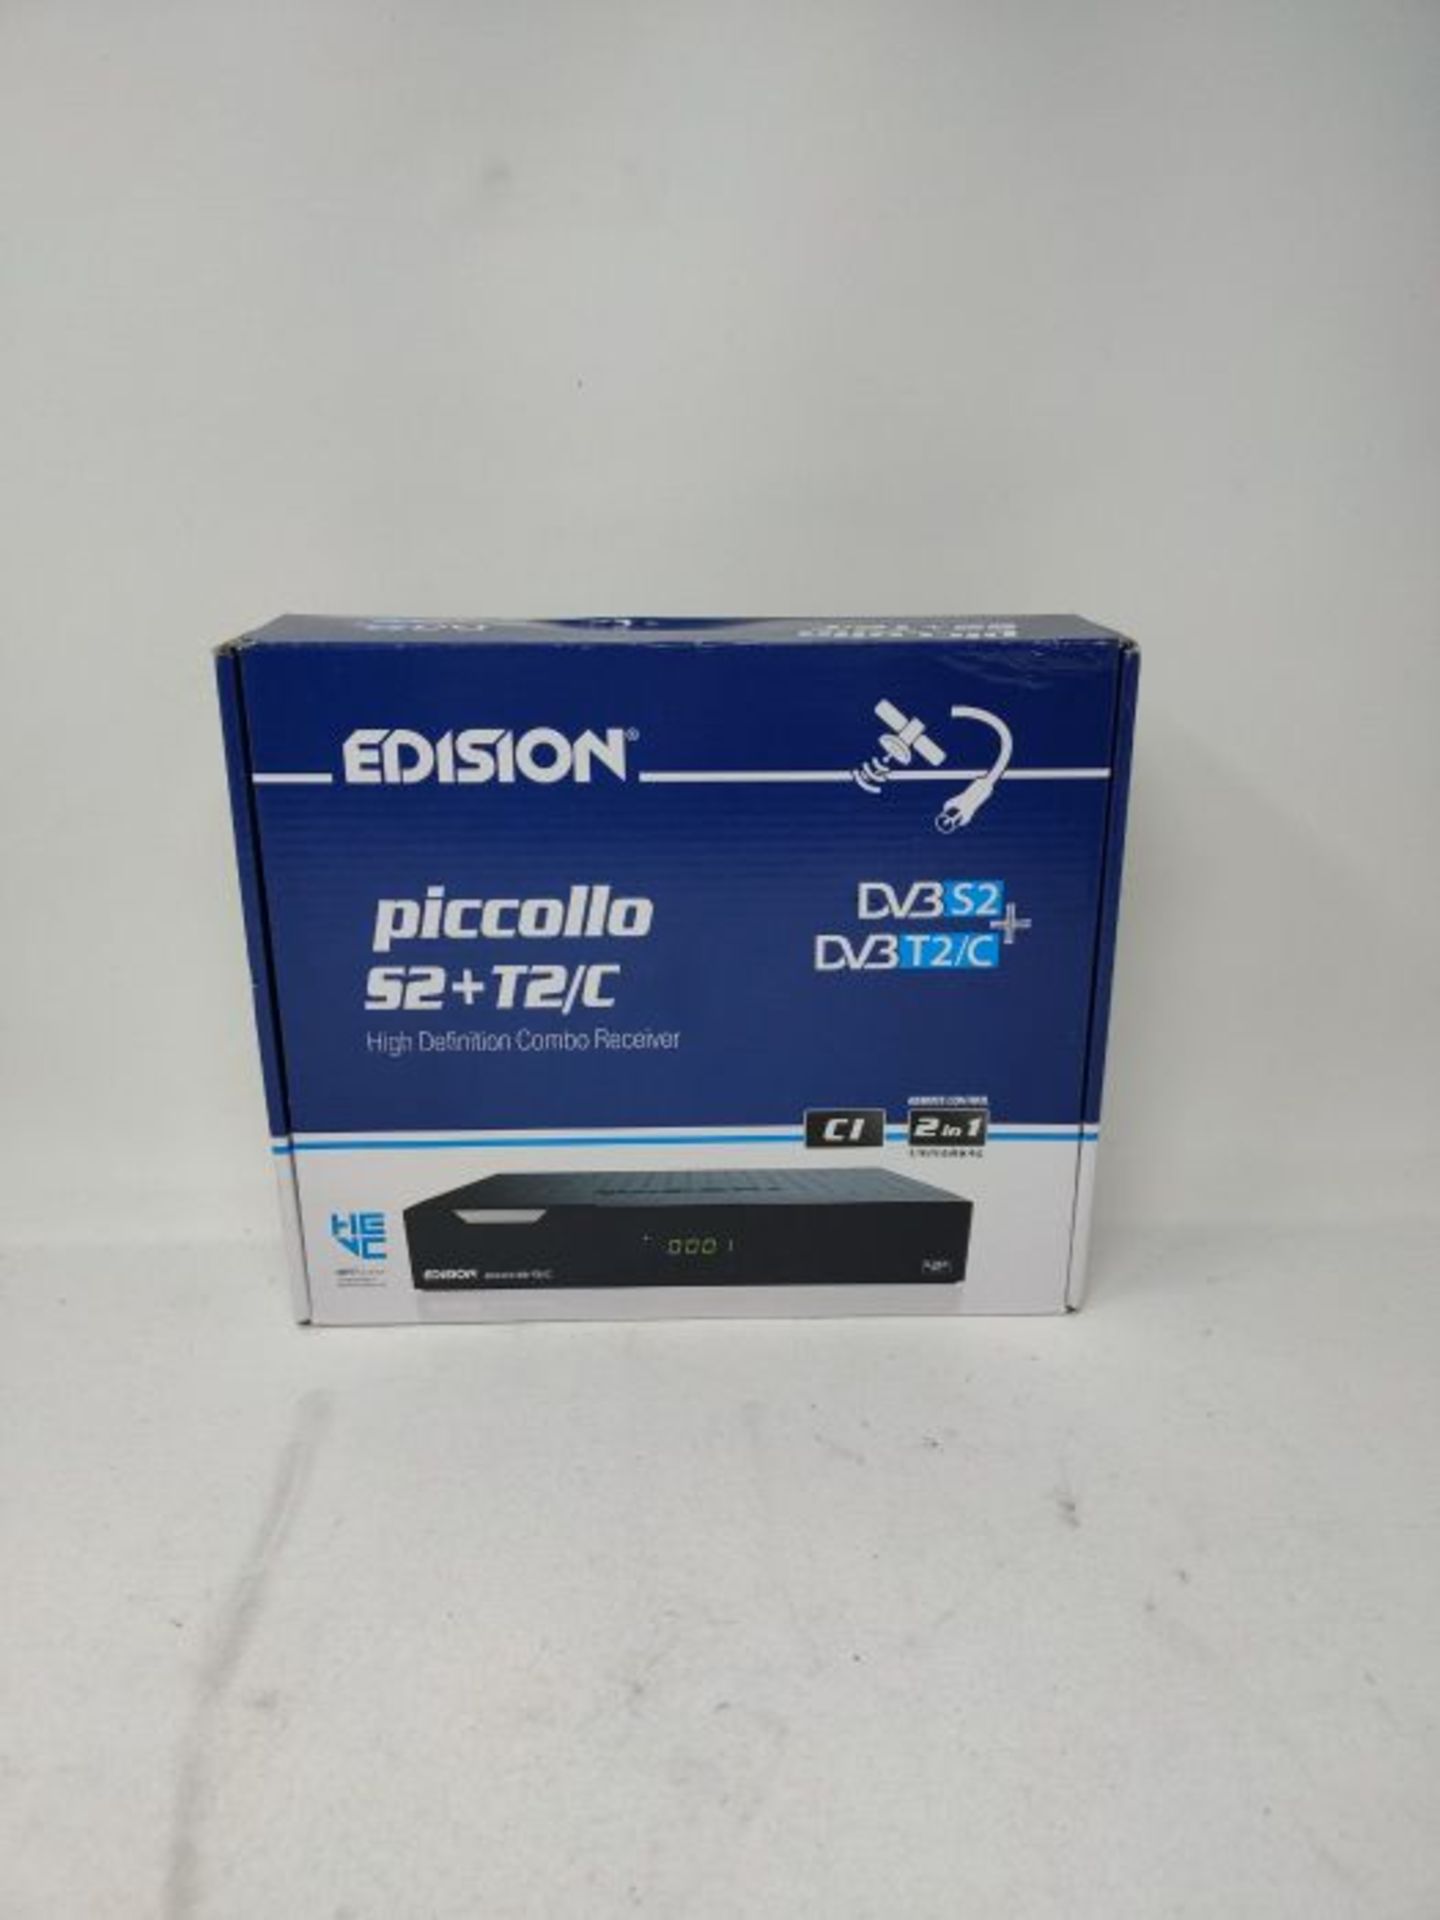 RRP £59.00 Edision PICCOLLO S2+T2/C Combo Receiver H.265/HEVC (DVB-S2, DVB-T2, DVB-C,) CI Full HD - Image 2 of 3